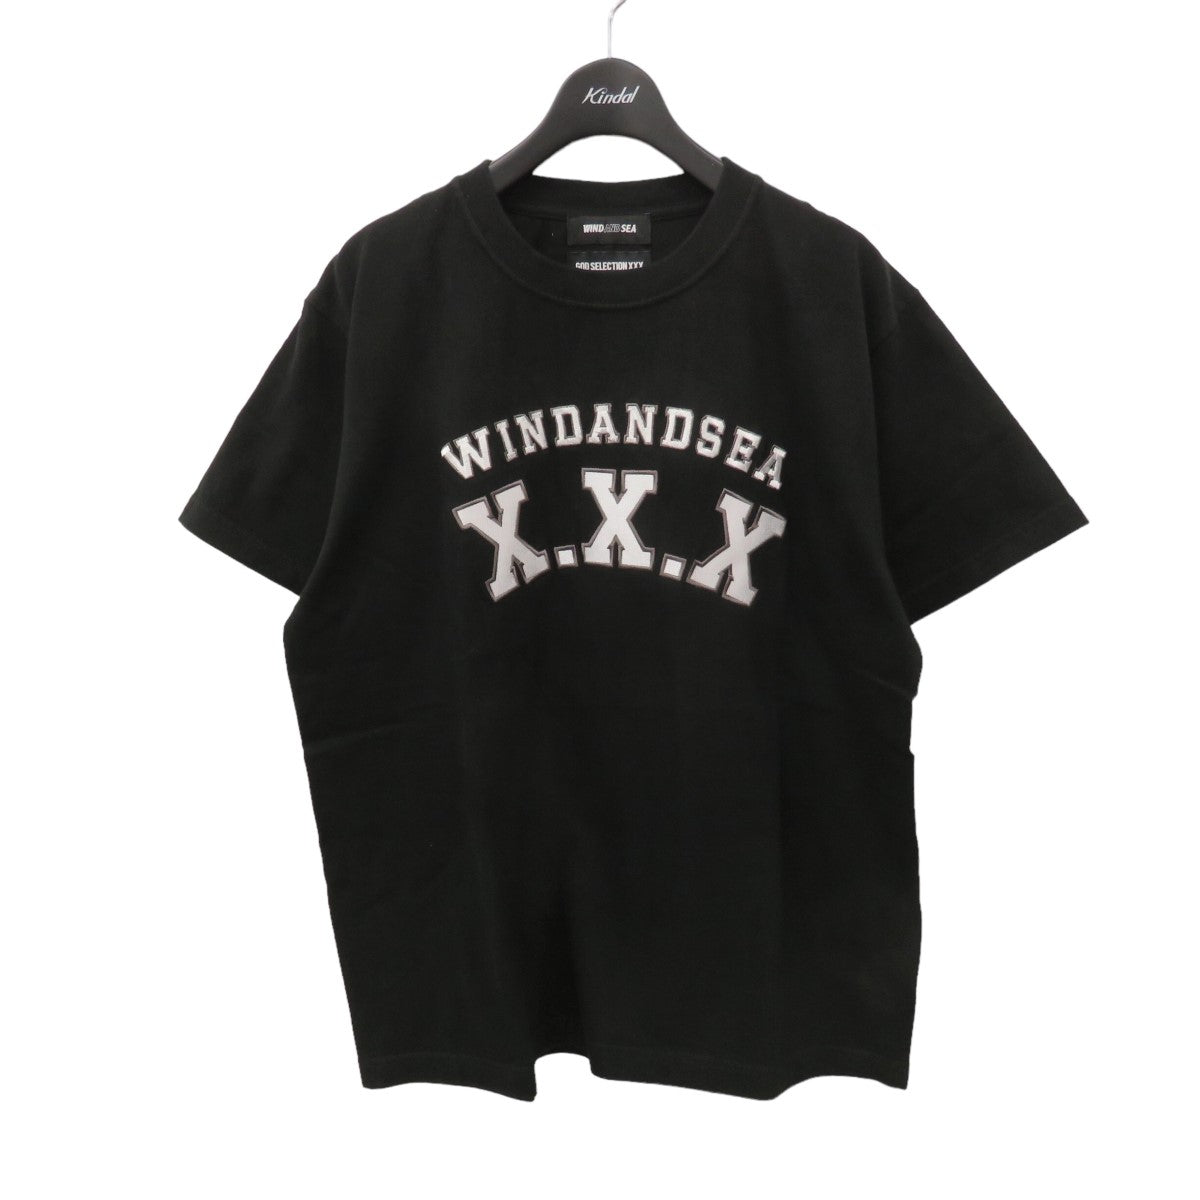 WIND AND SEA×GOD SELECTION XXX X．X．X S／S TEE ロゴTシャツ WDS ...